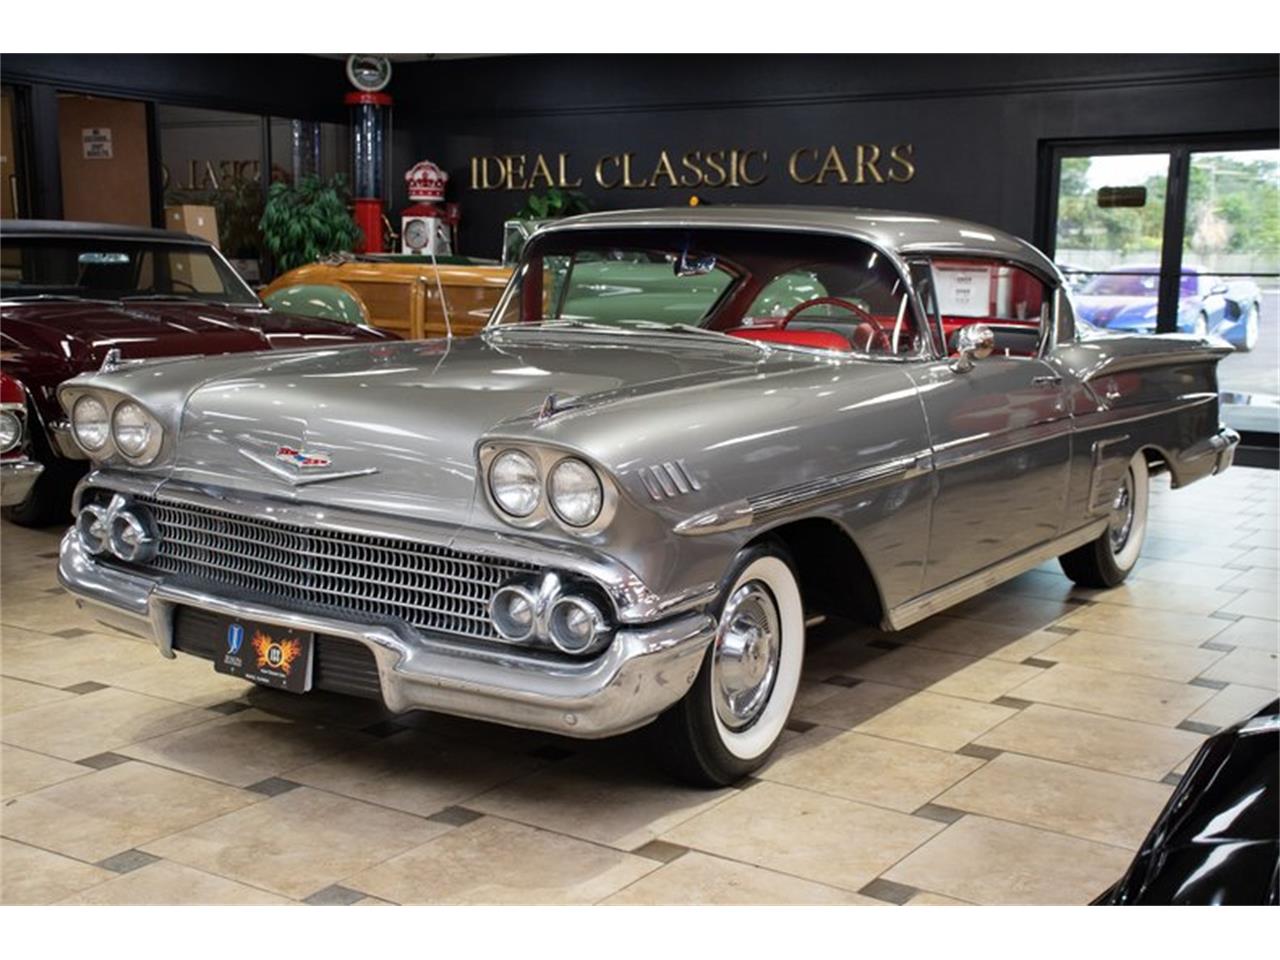 For Sale: 1958 Chevrolet Impala in Venice, Florida for sale in Venice, FL